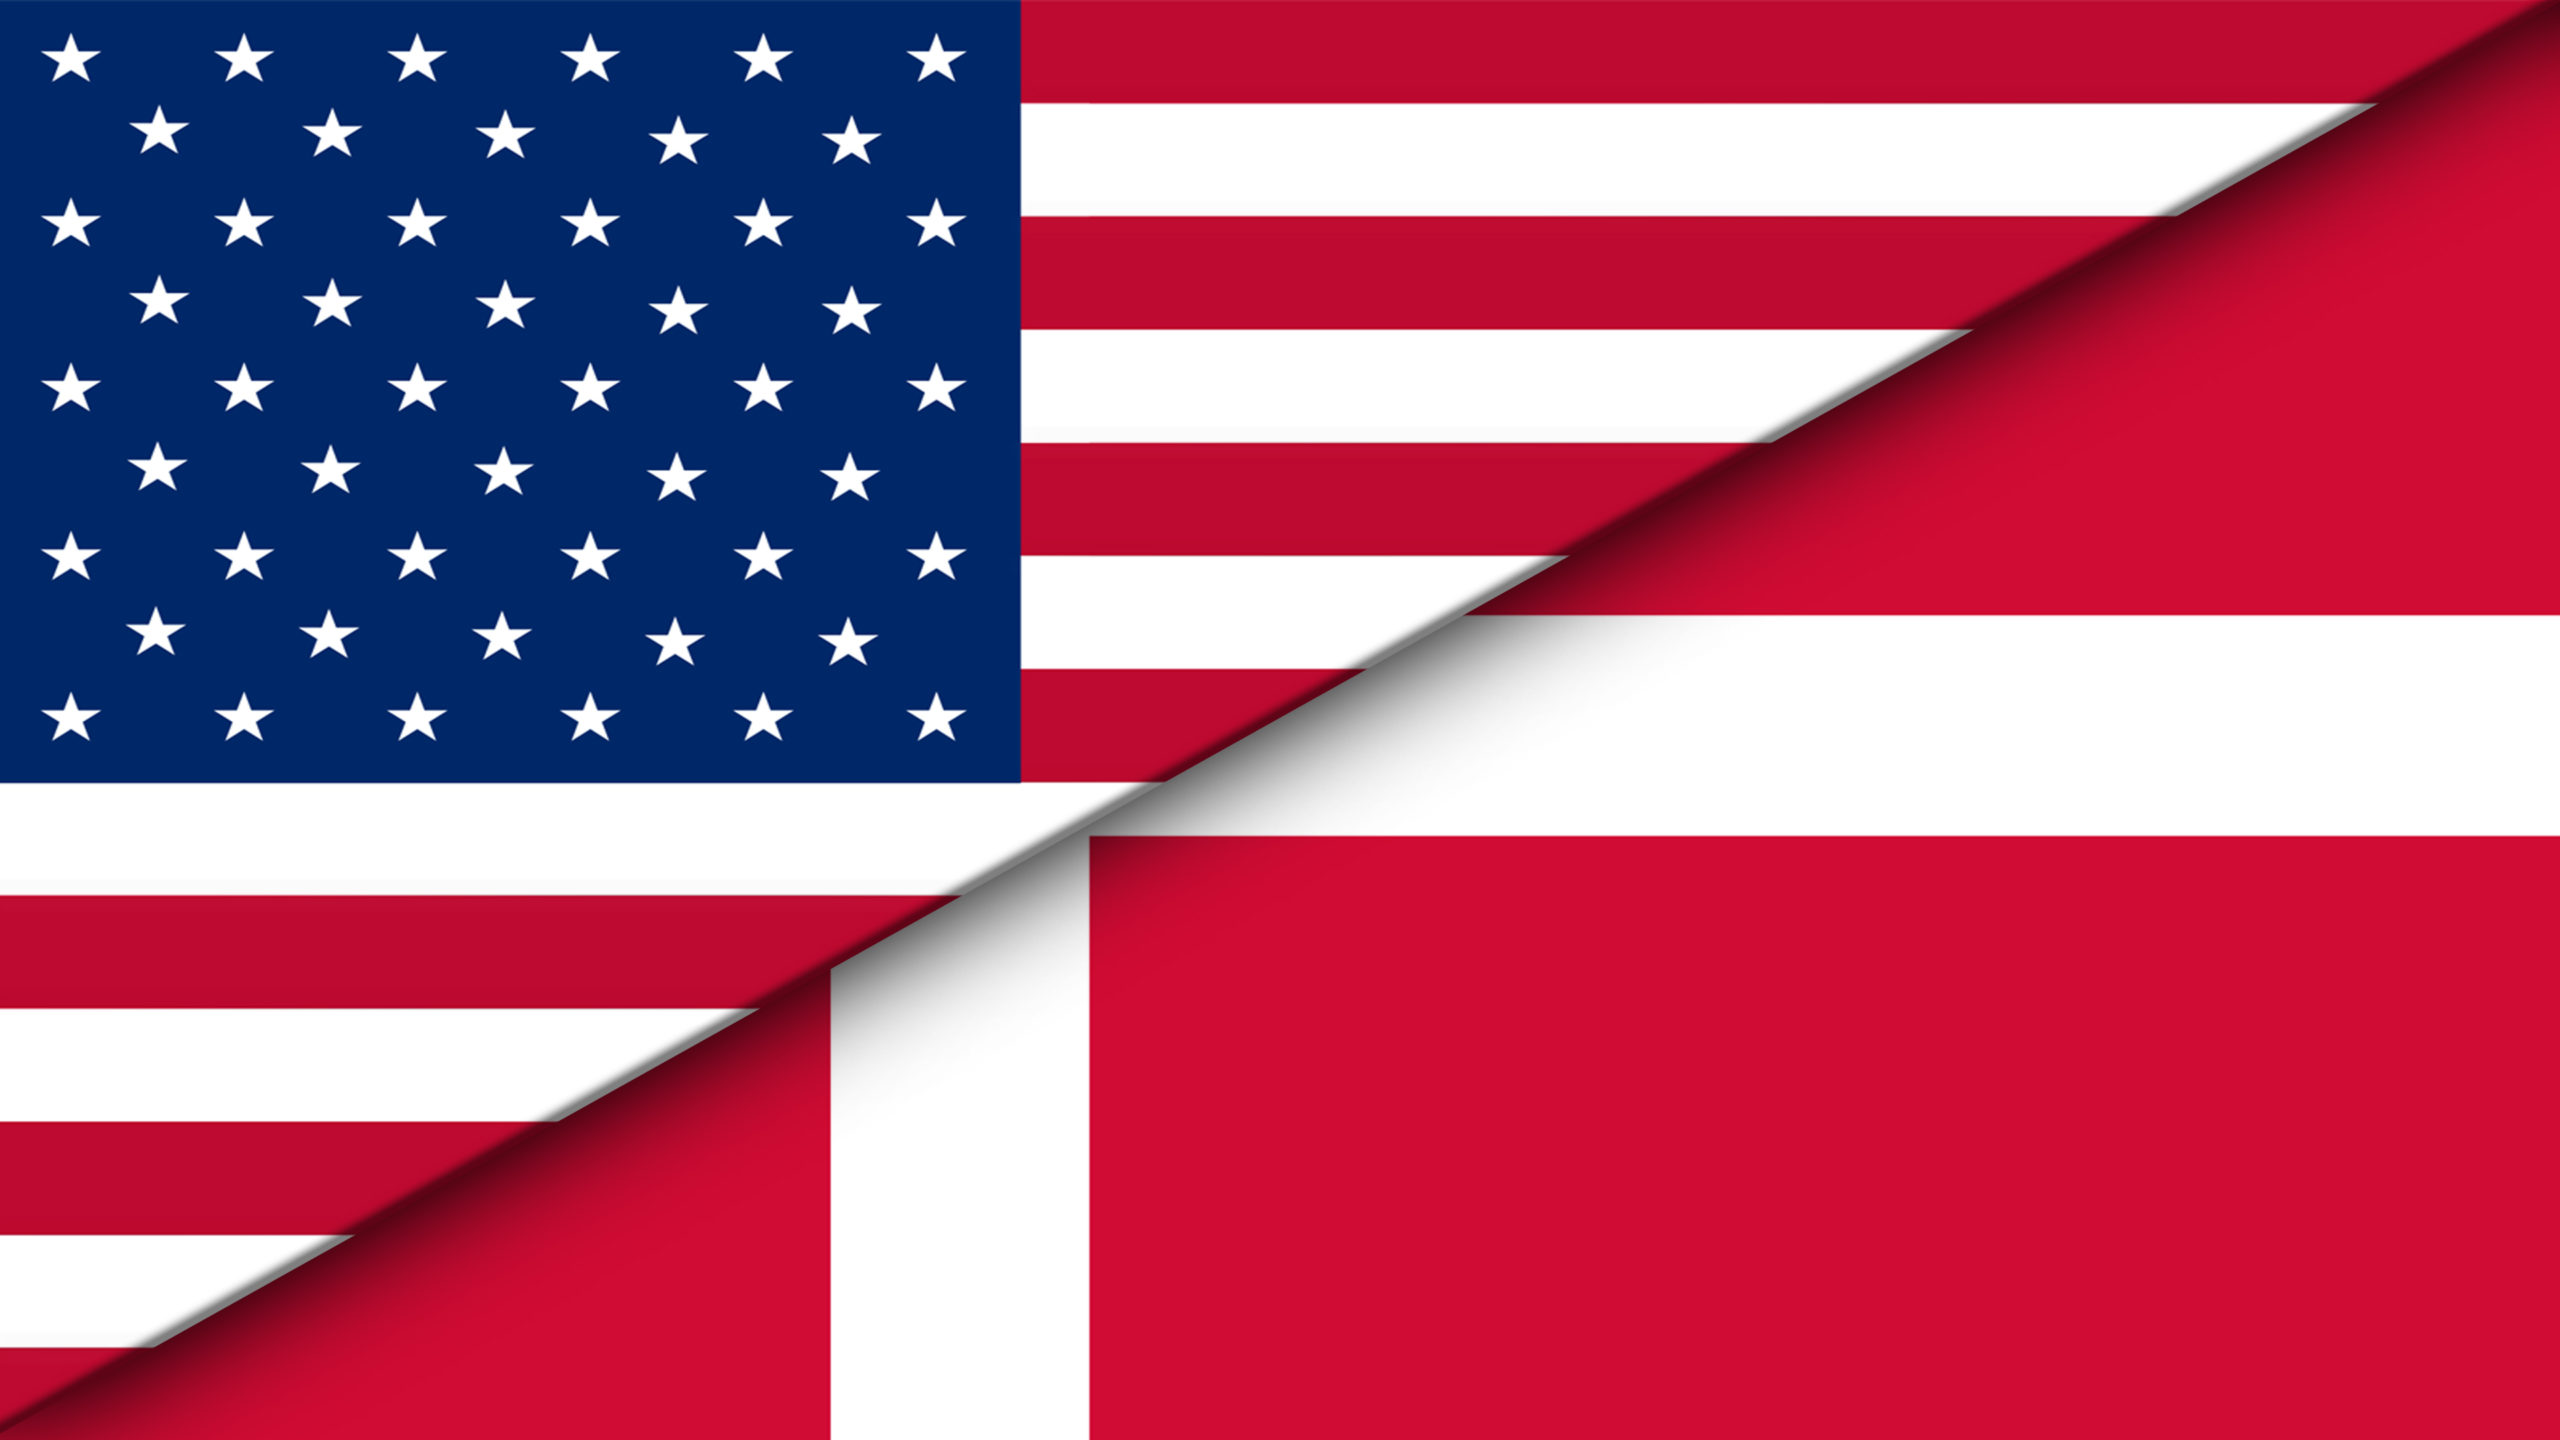 Amercan-Danish flags